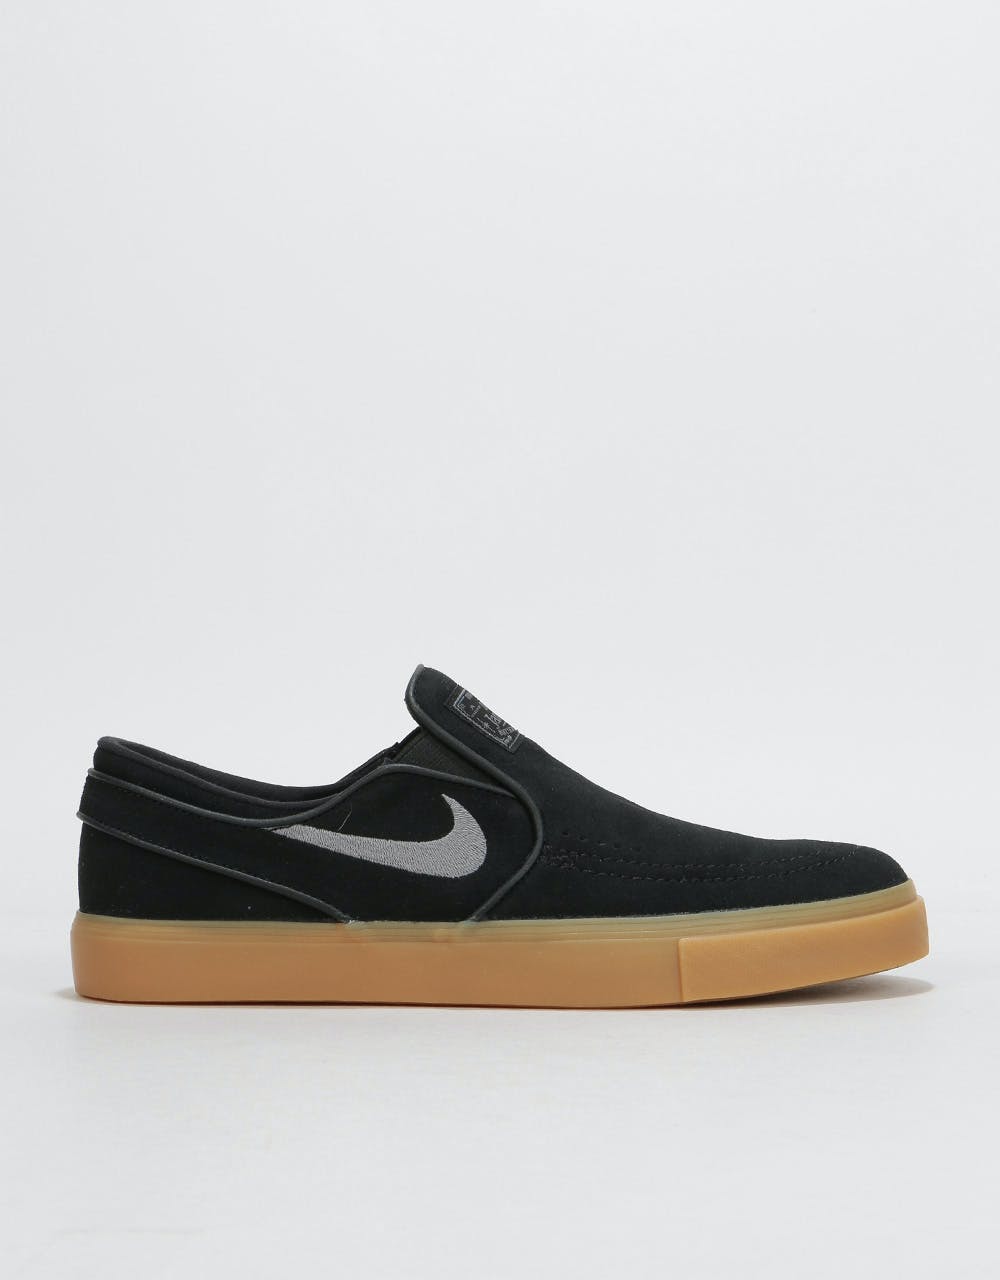 Nike SB Zoom Stefan Janoski Slip Skate Shoes - Black/Gunsmoke-Gum